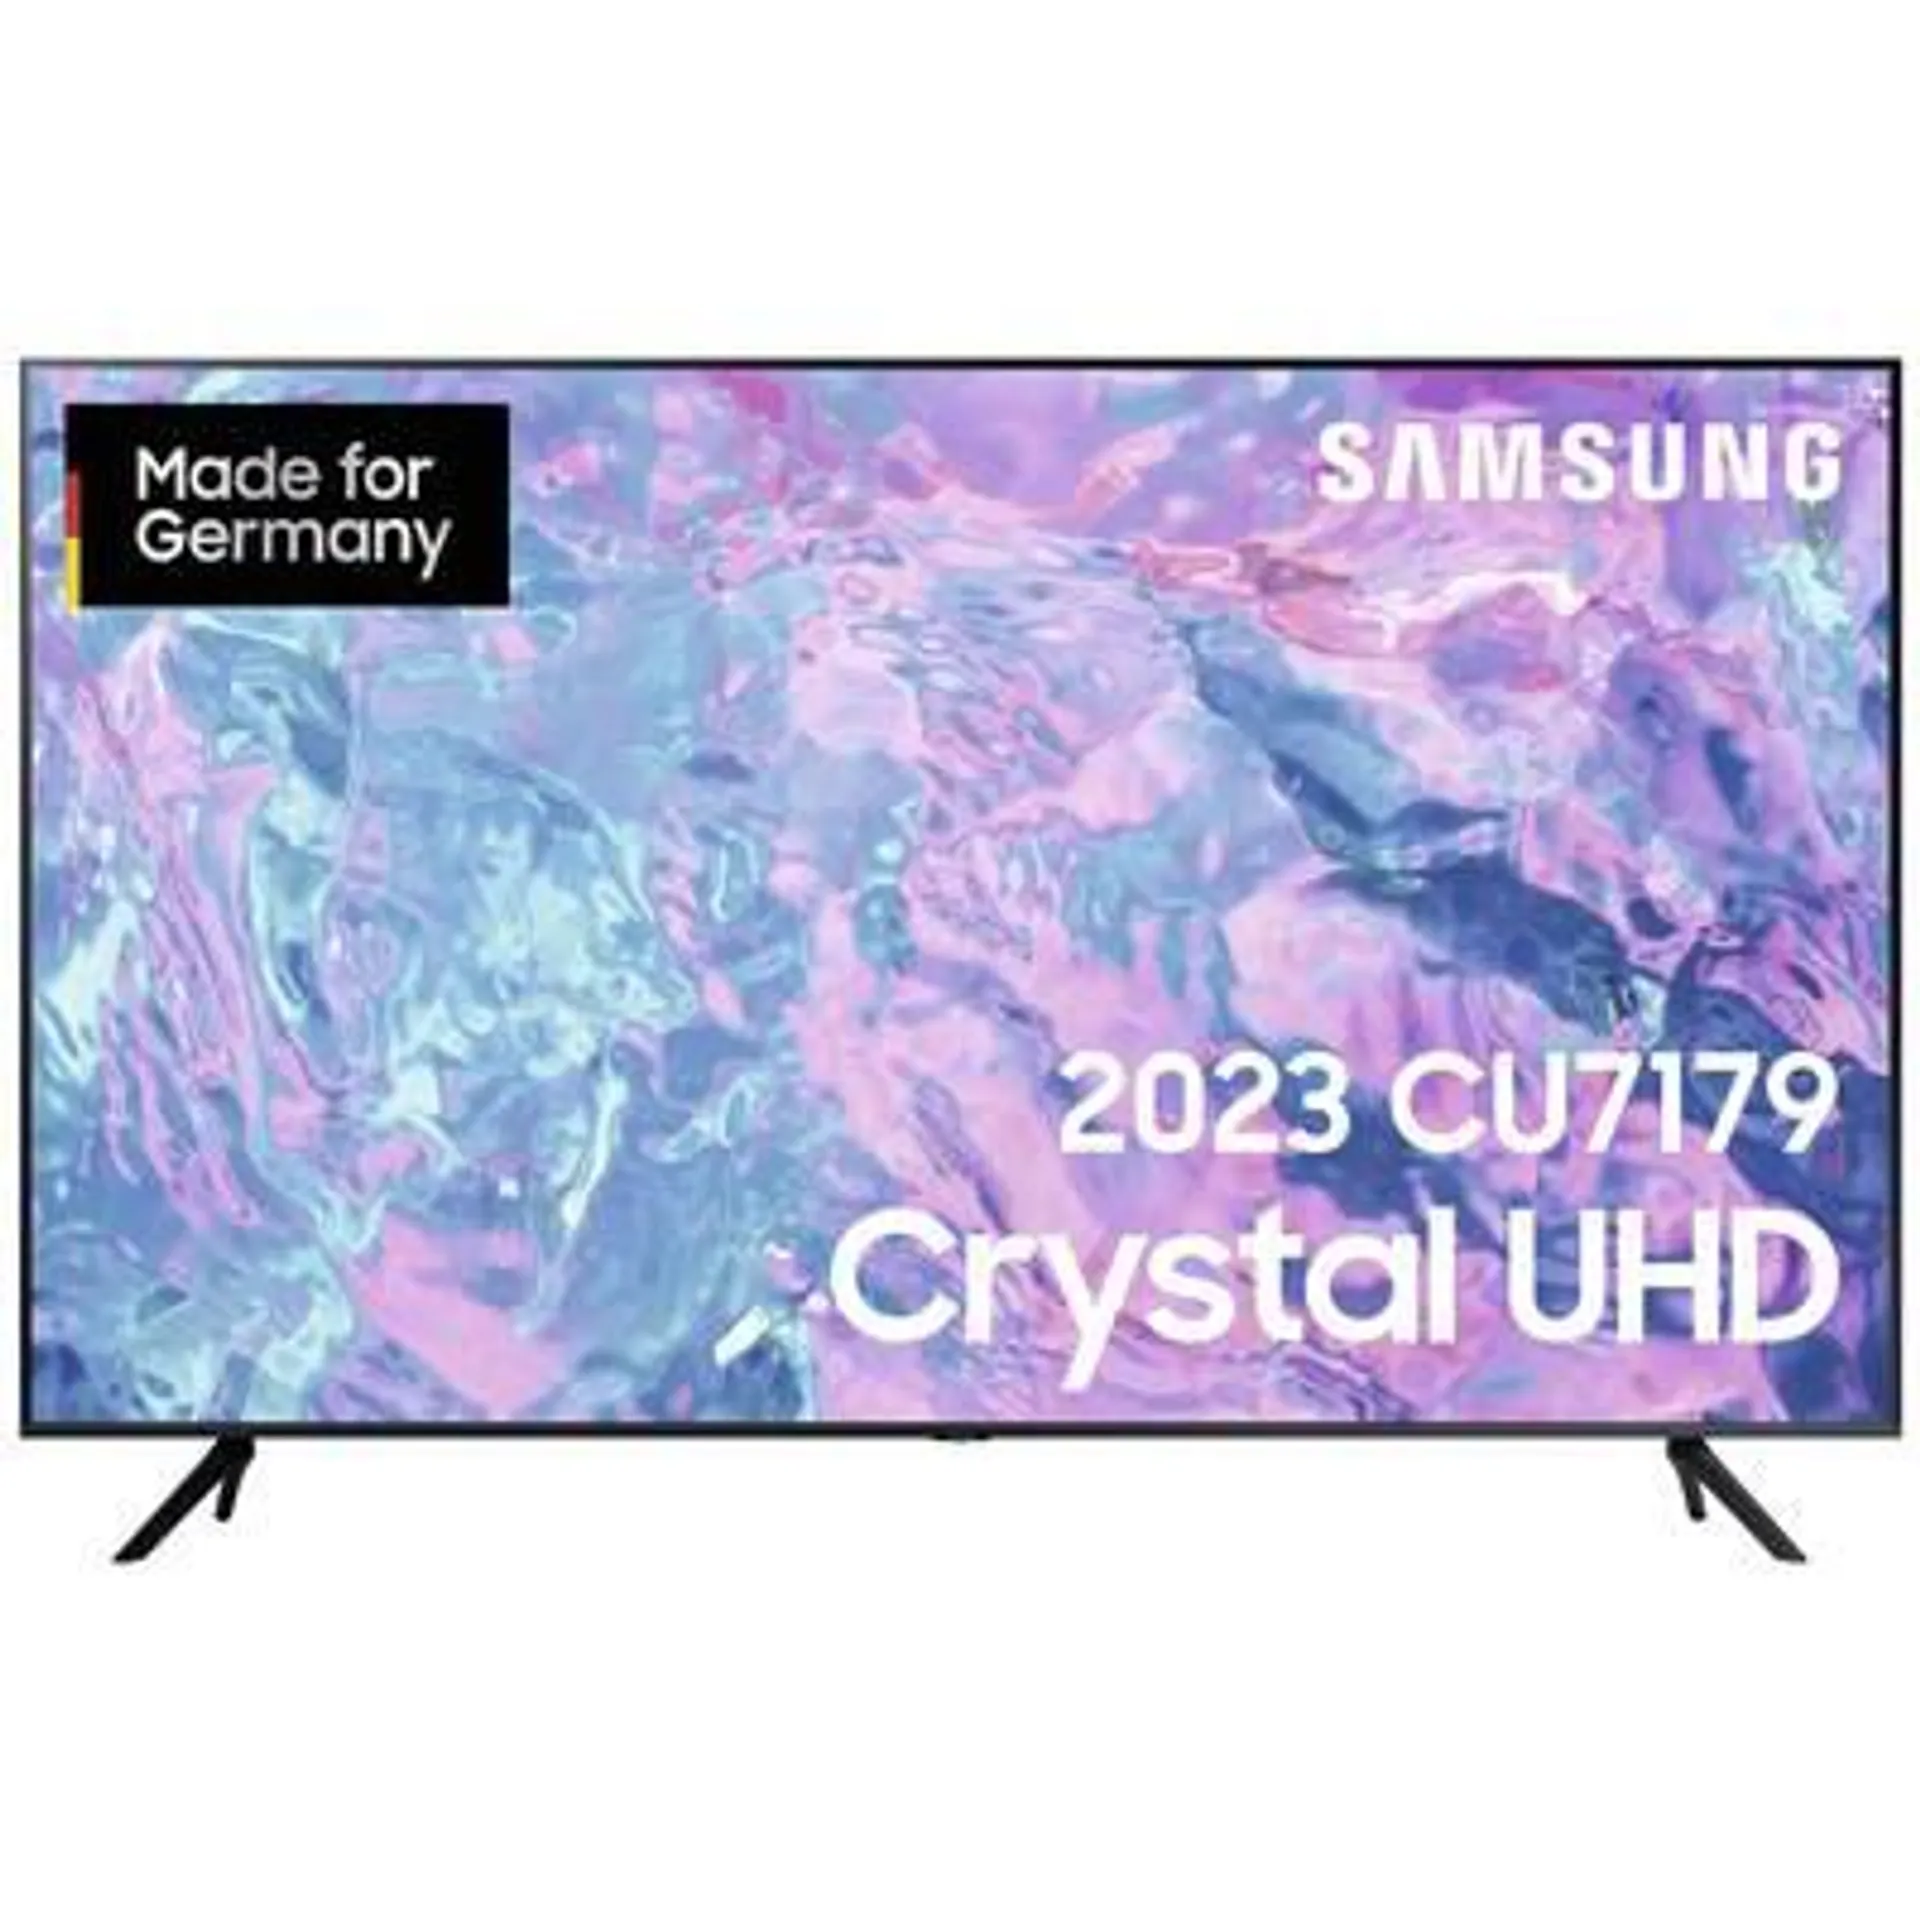 Samsung Crystal UHD 2023 CU7179 LED-TV 138 cm 55 Zoll EEK G (A - G) CI+, DVB-C, DVB-S2, DVB-T2 HD, Smart TV, UHD, WLAN S